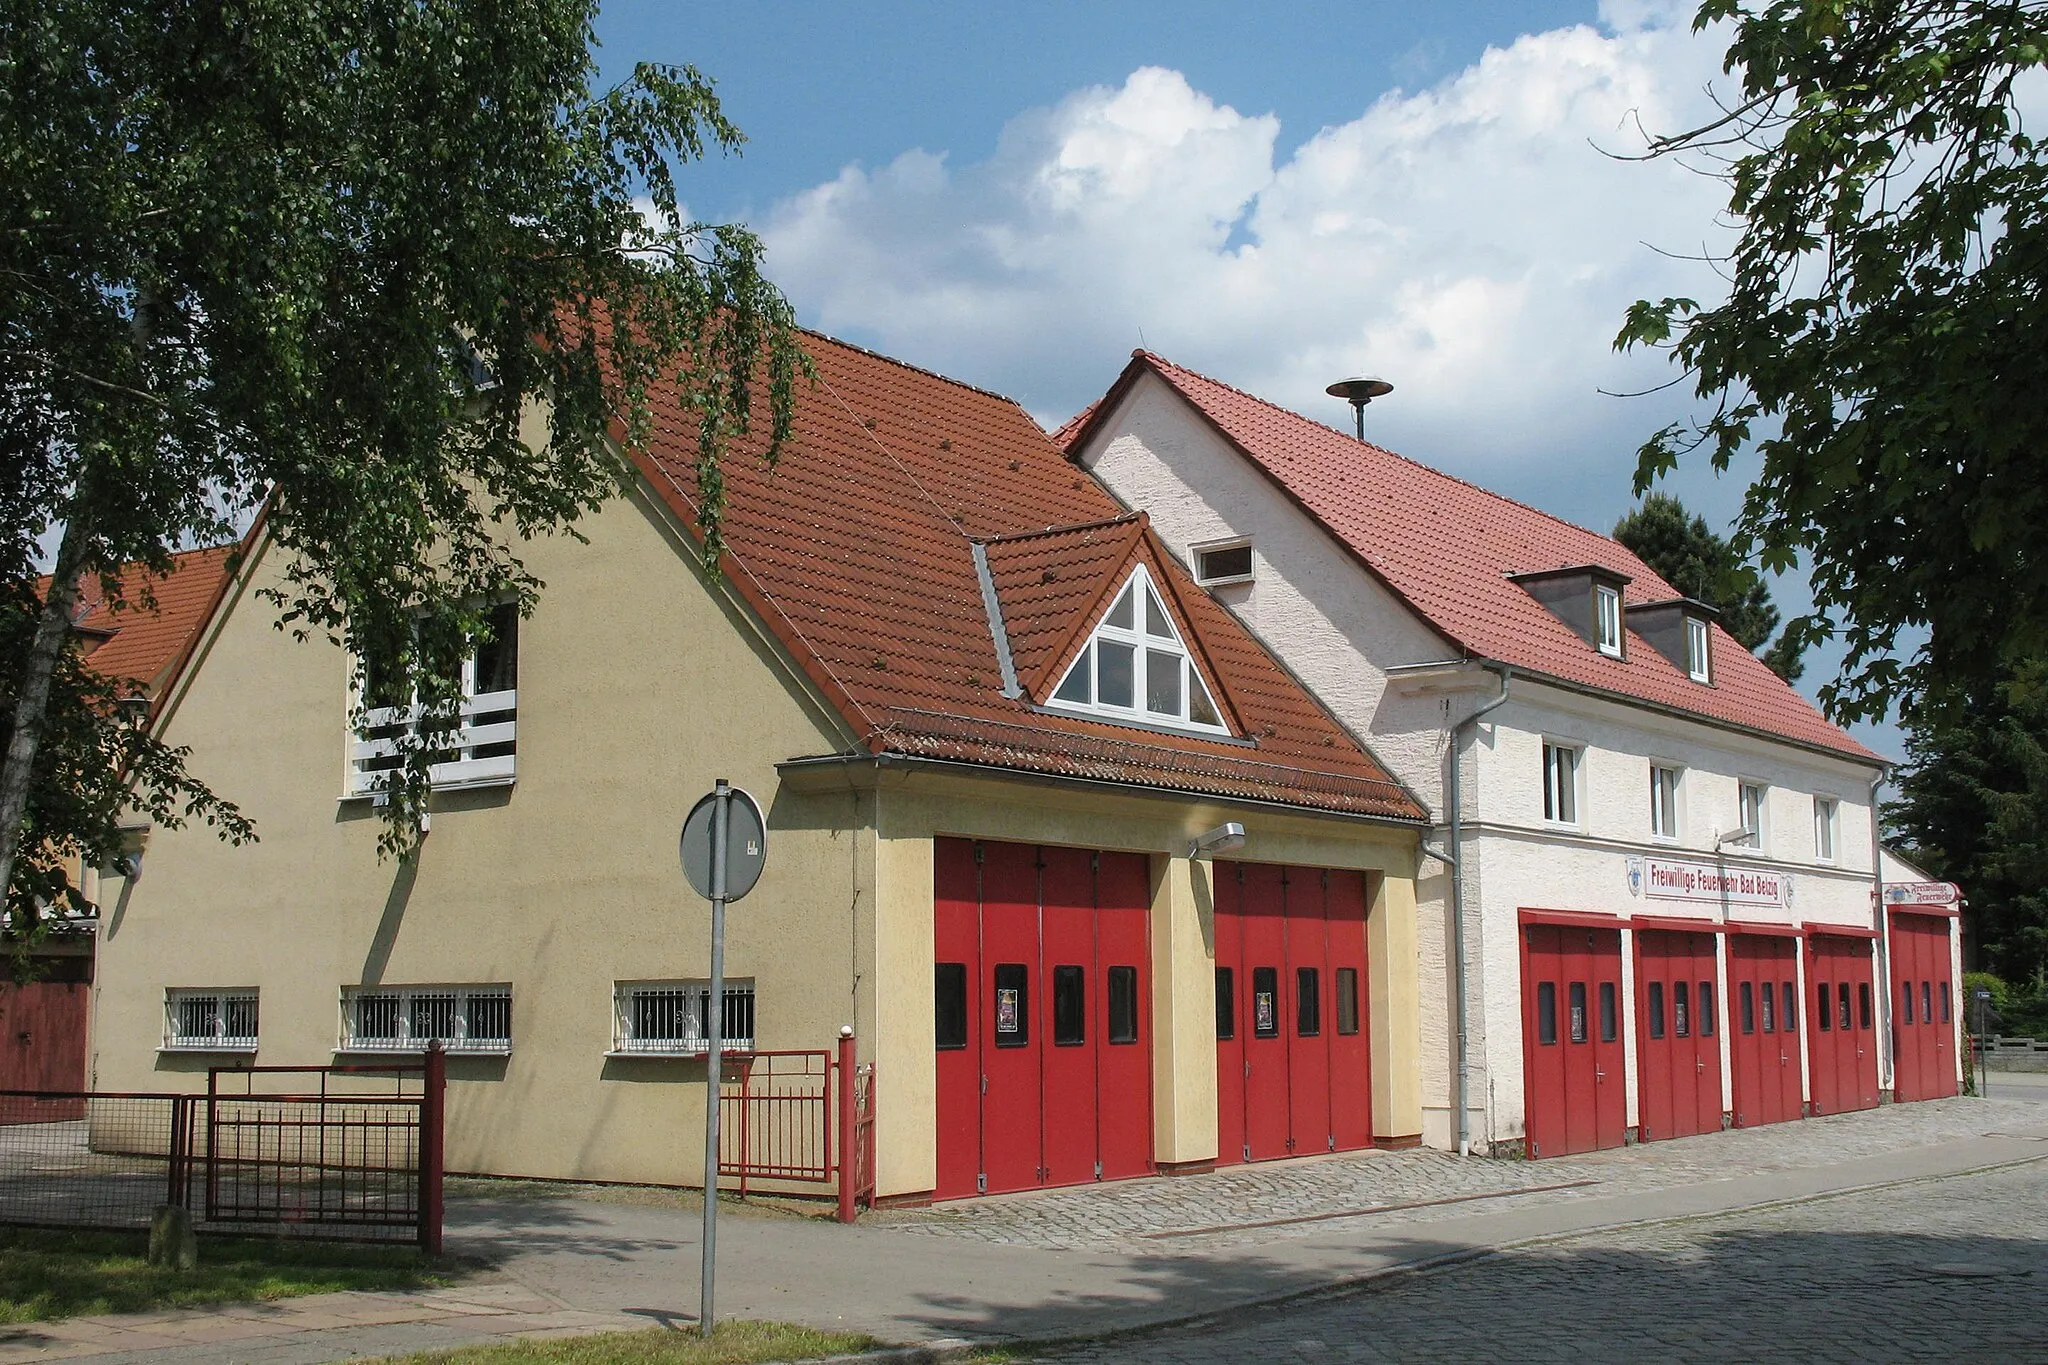 Photo showing: Fire station in Bad Belzig in Brandenburg, Germany